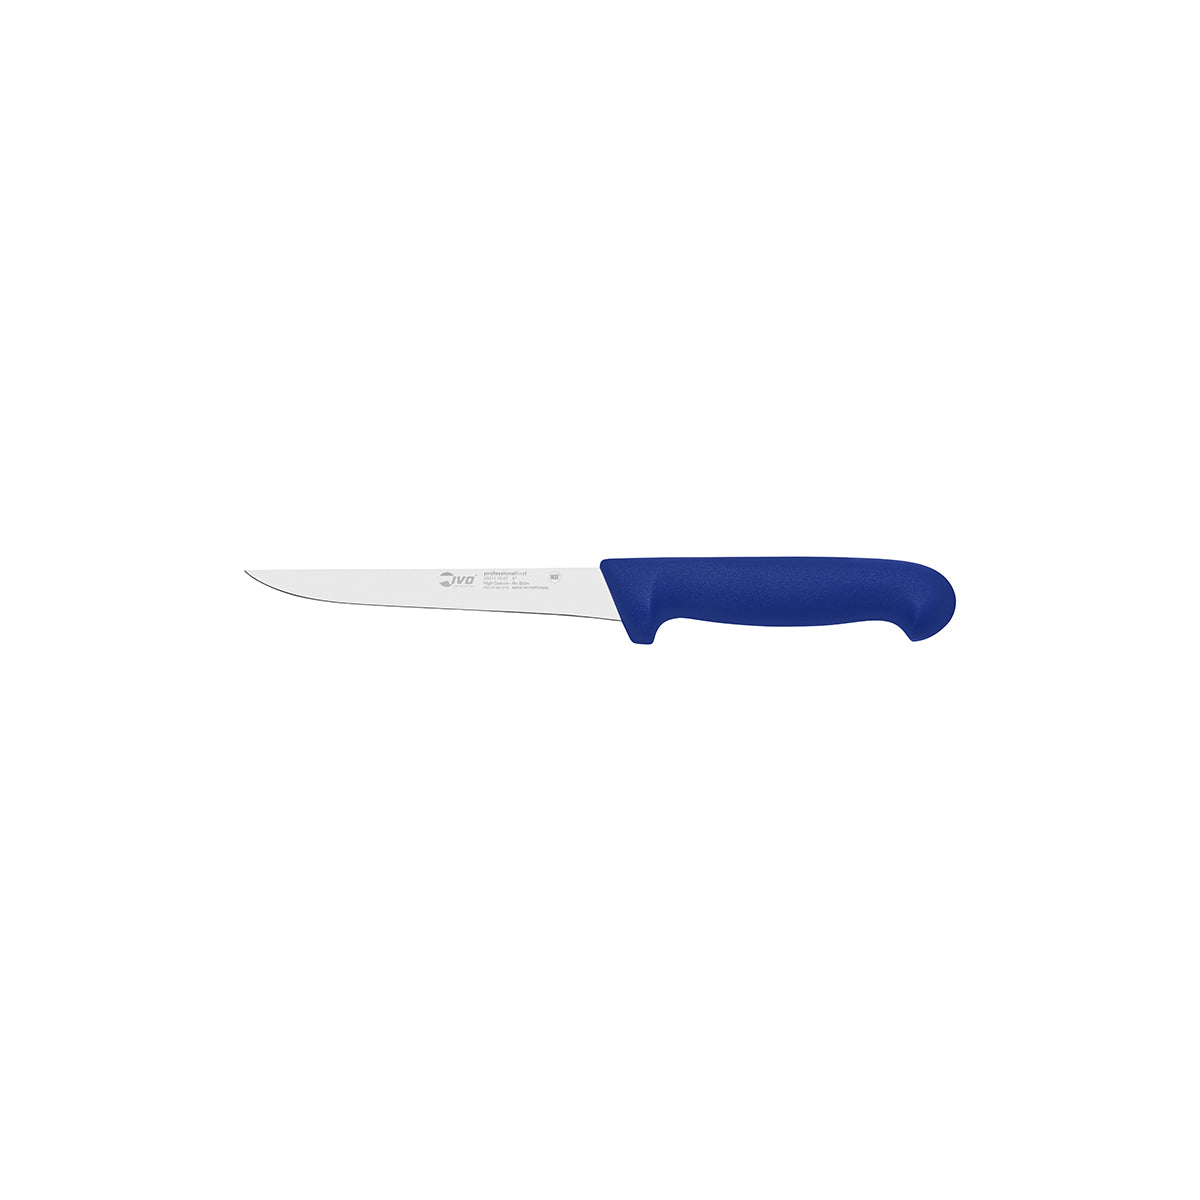 25408 Ivo Professional Line I Boning Knife Blue 150mm Tomkin Australia Hospitality Supplies